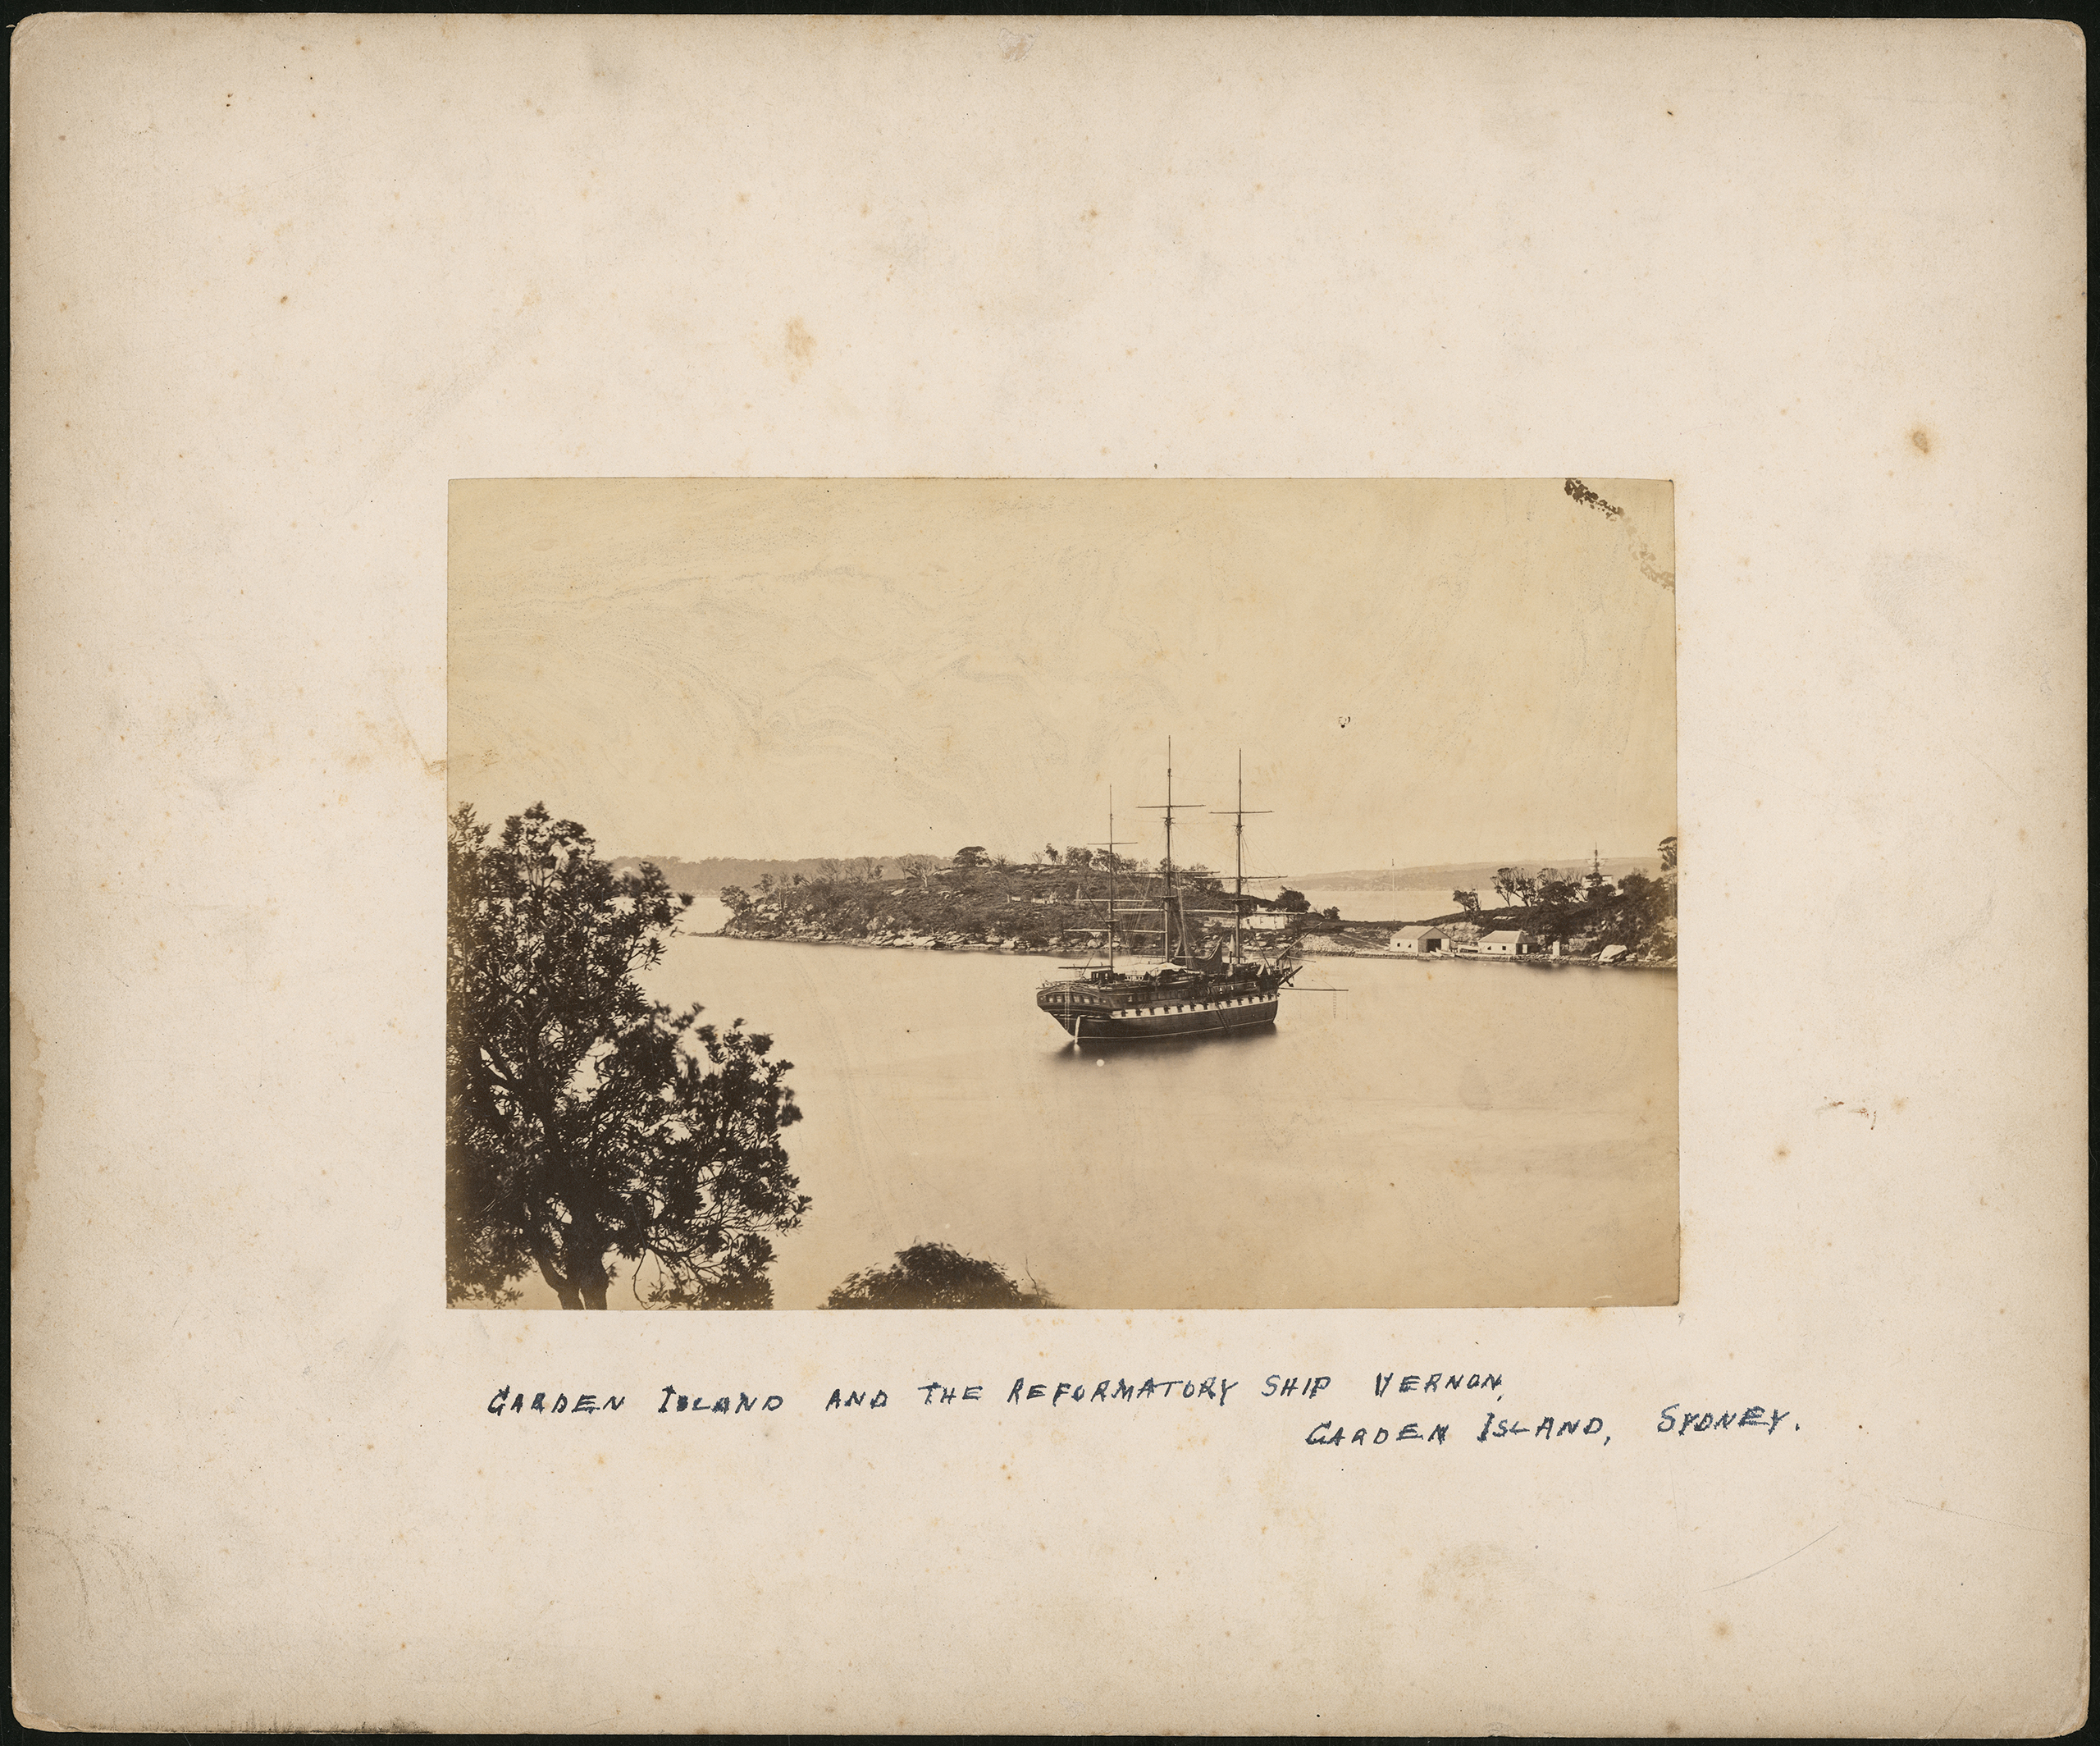 Photograph of Garden Island and reformatory ship 'Vernon', Sydney